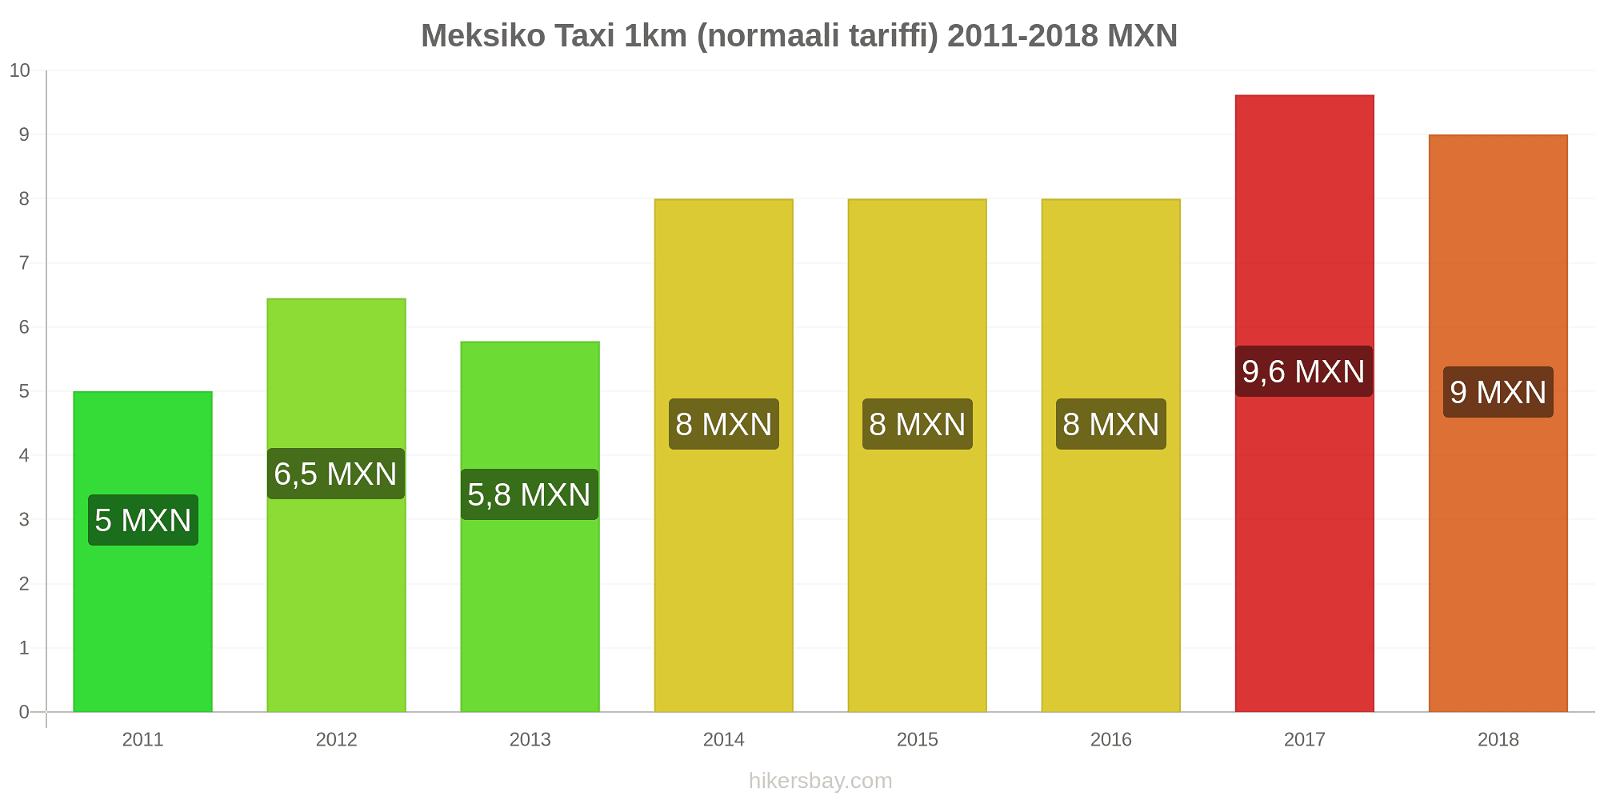 Meksiko hintojen muutokset Taxi 1km (normaali tariffi) hikersbay.com